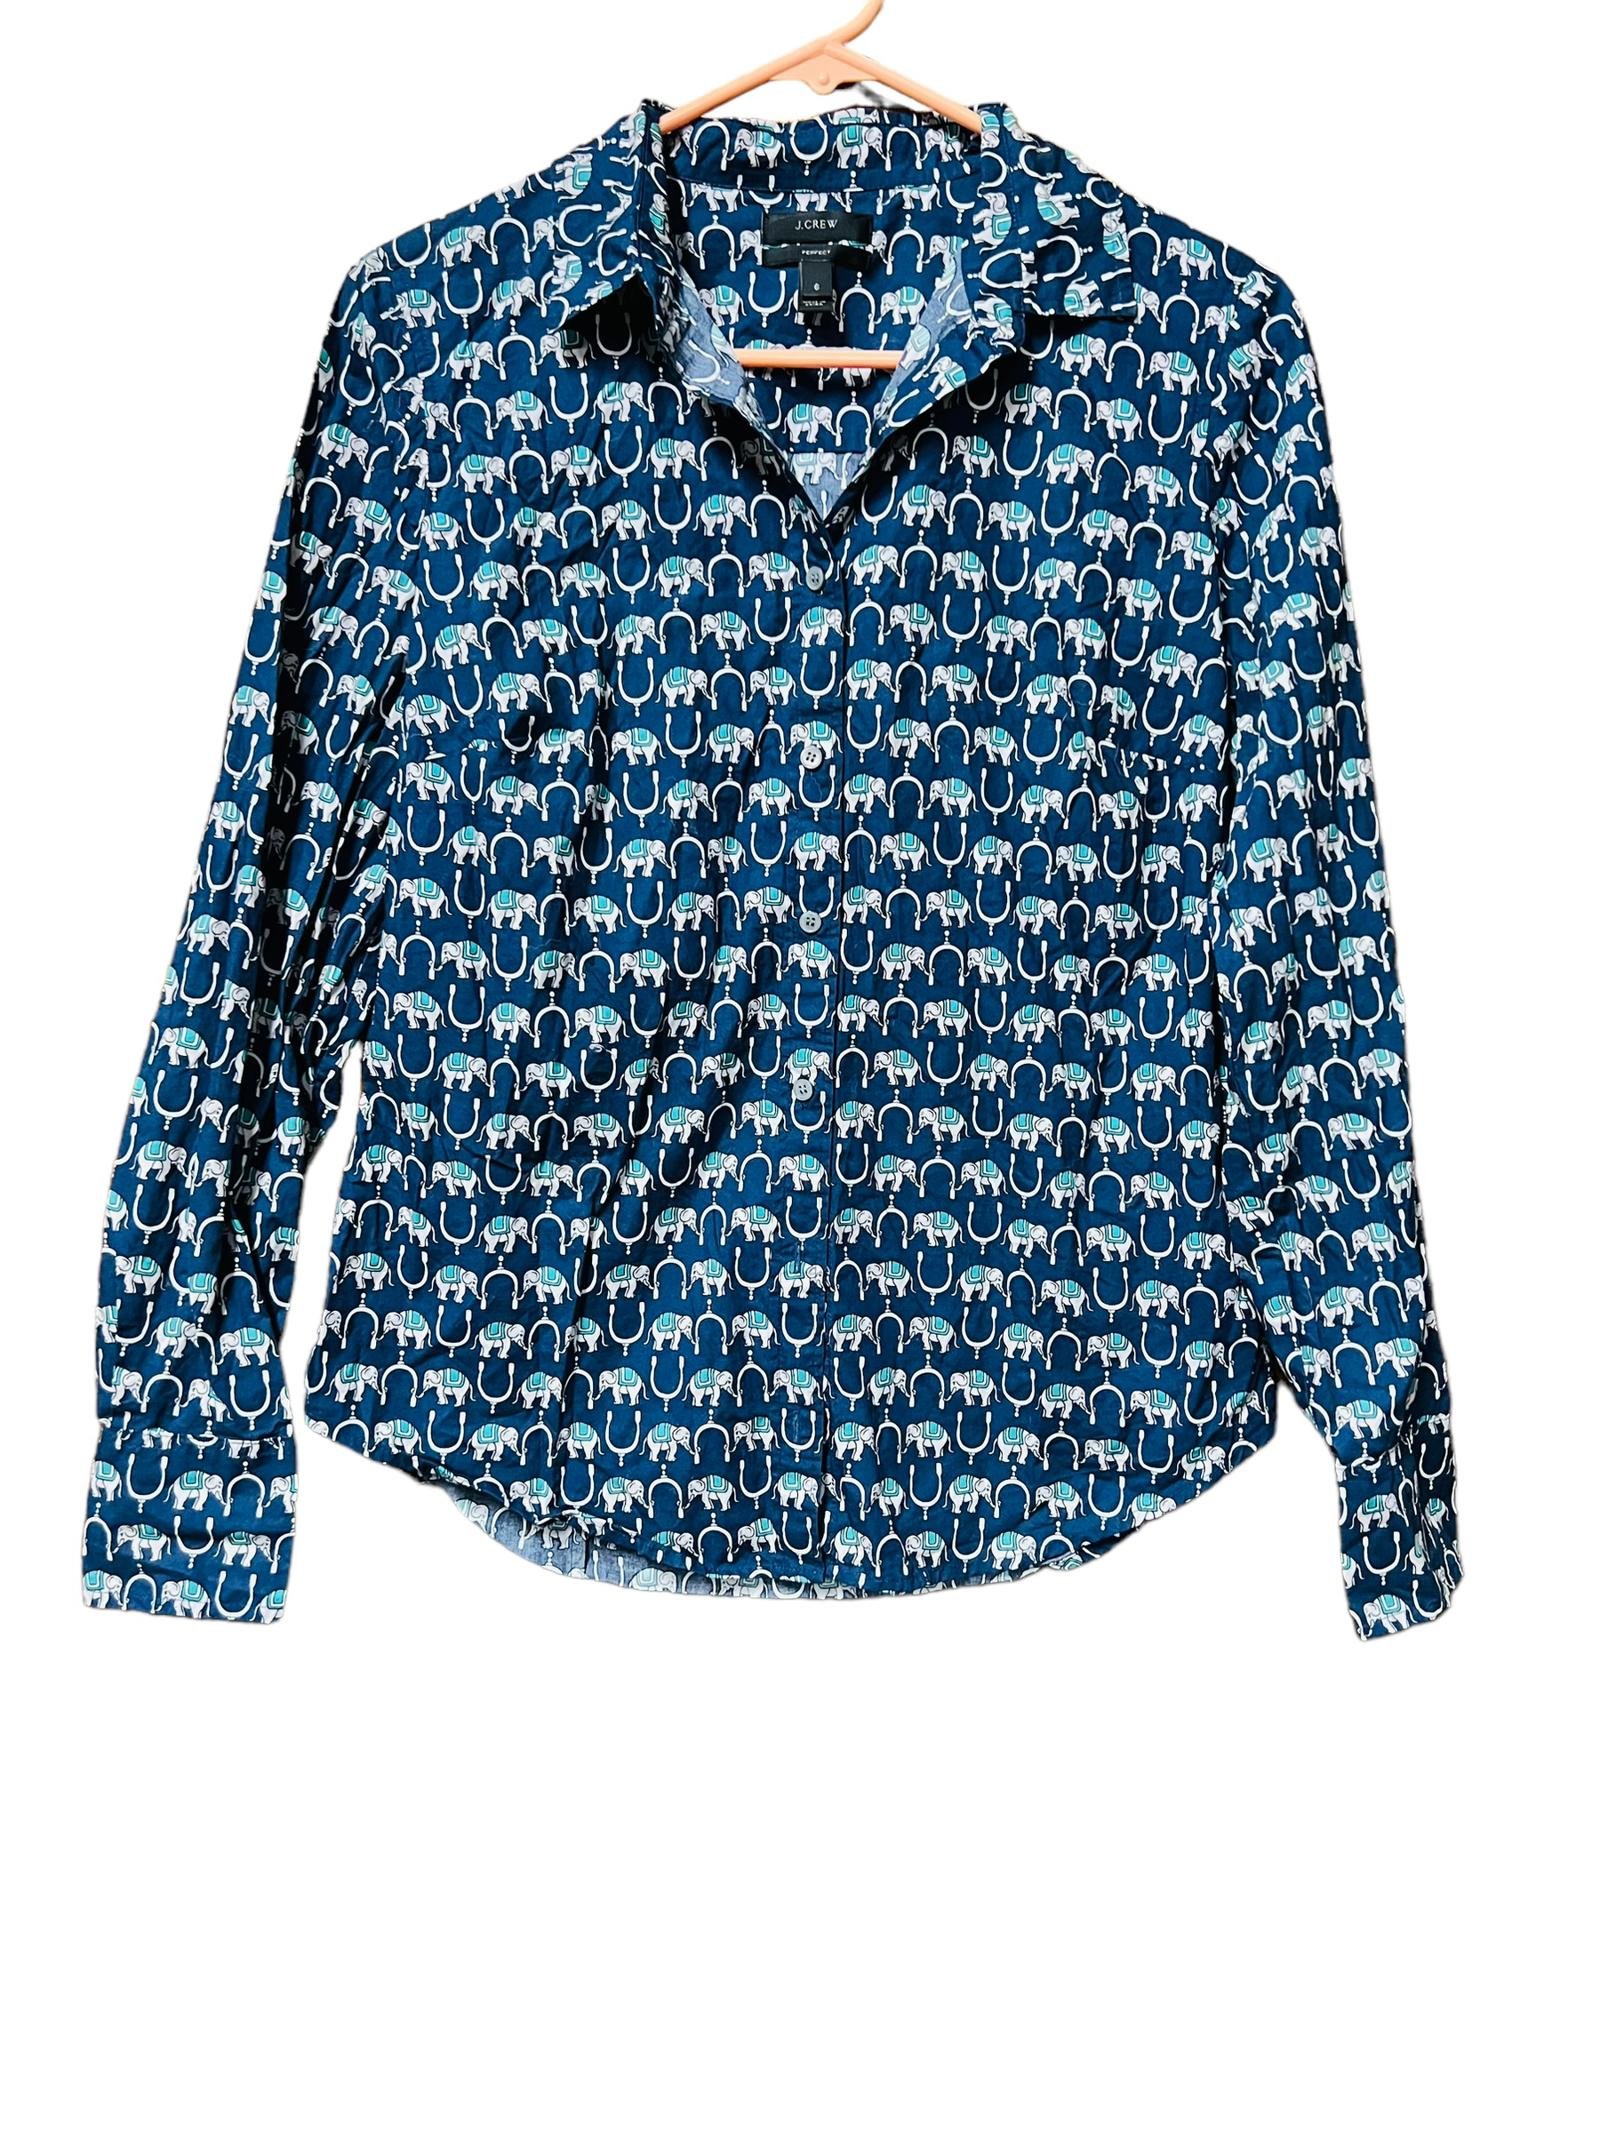 Womens J. Crew blue elephant printed button down shirt size 6 EvupK0VT0